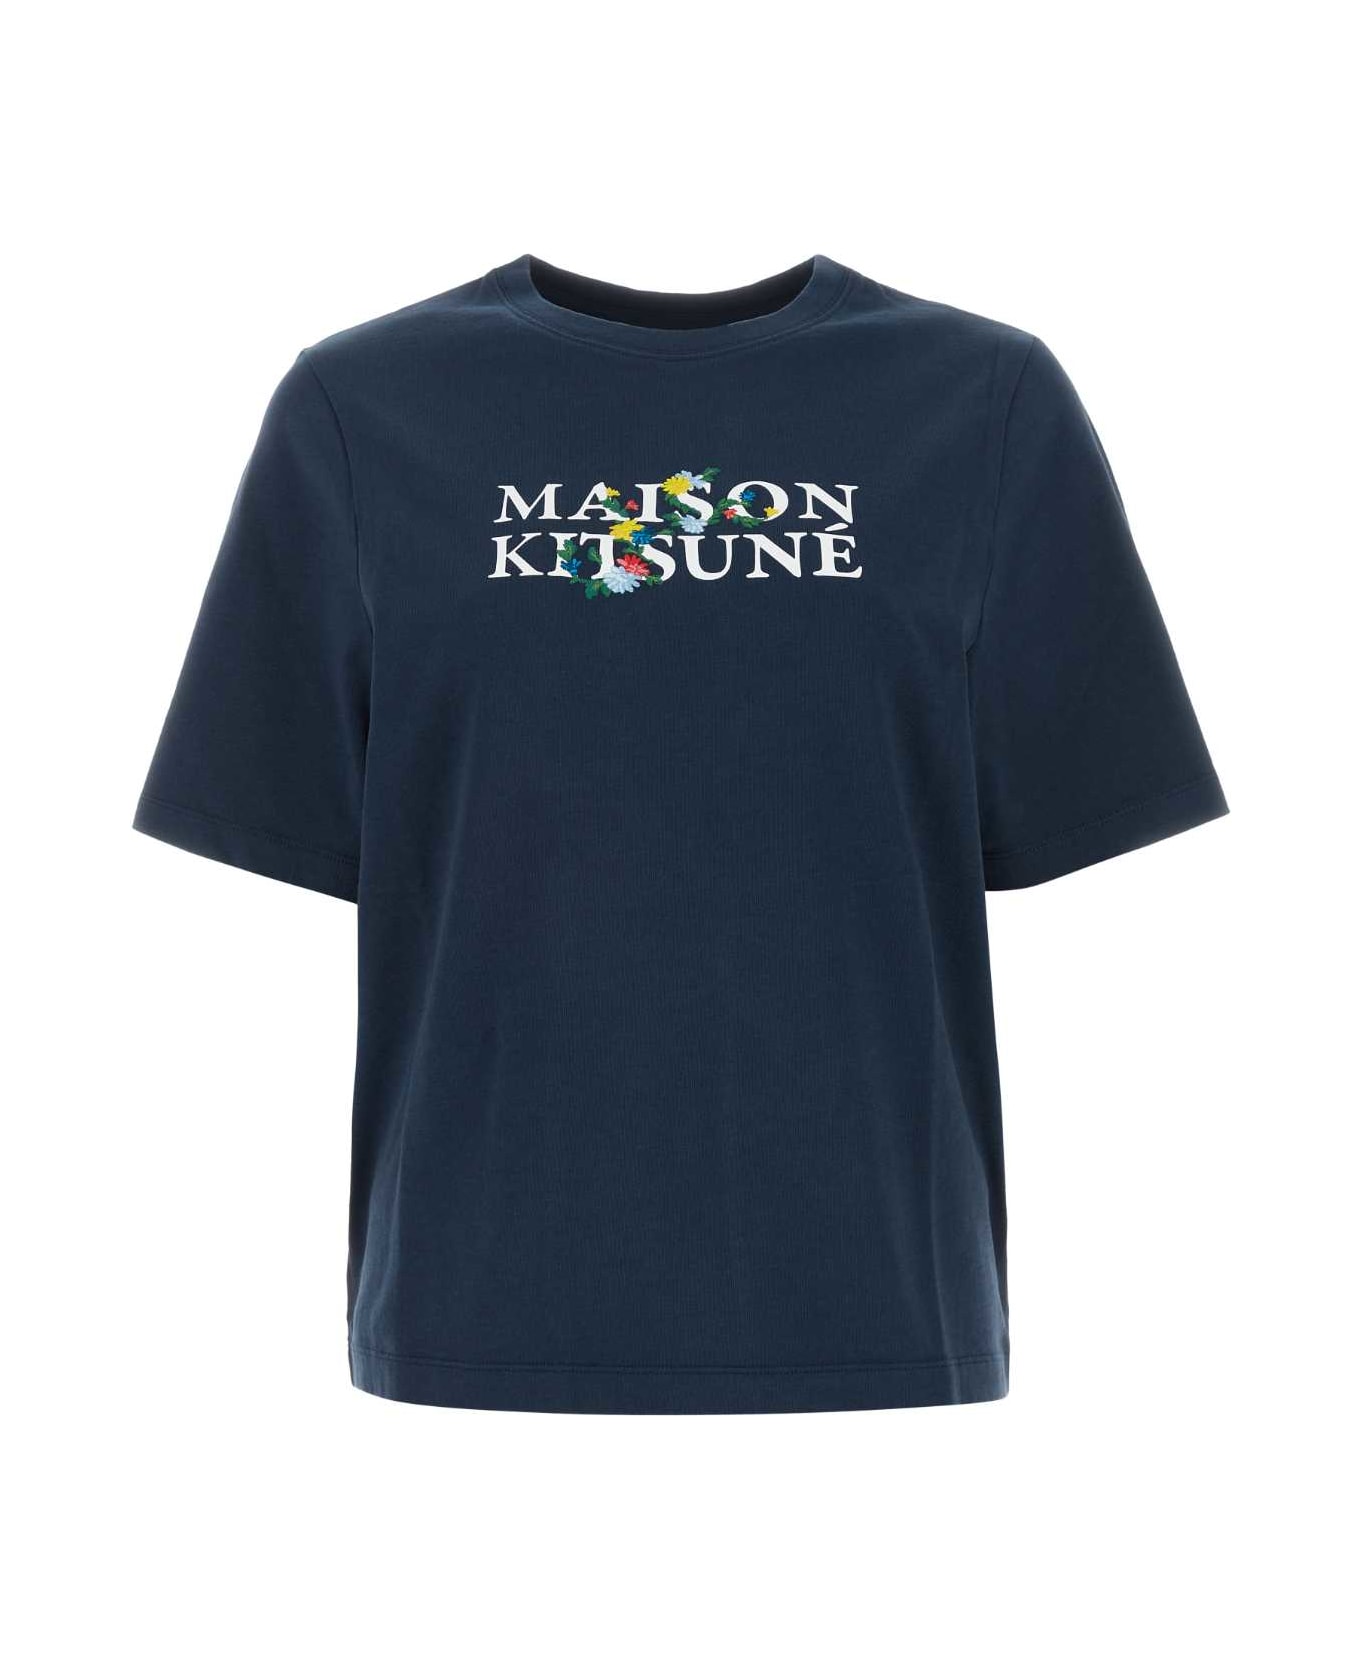 Maison Kitsuné Navy Blue Cotton T-shirt - INK BLUE